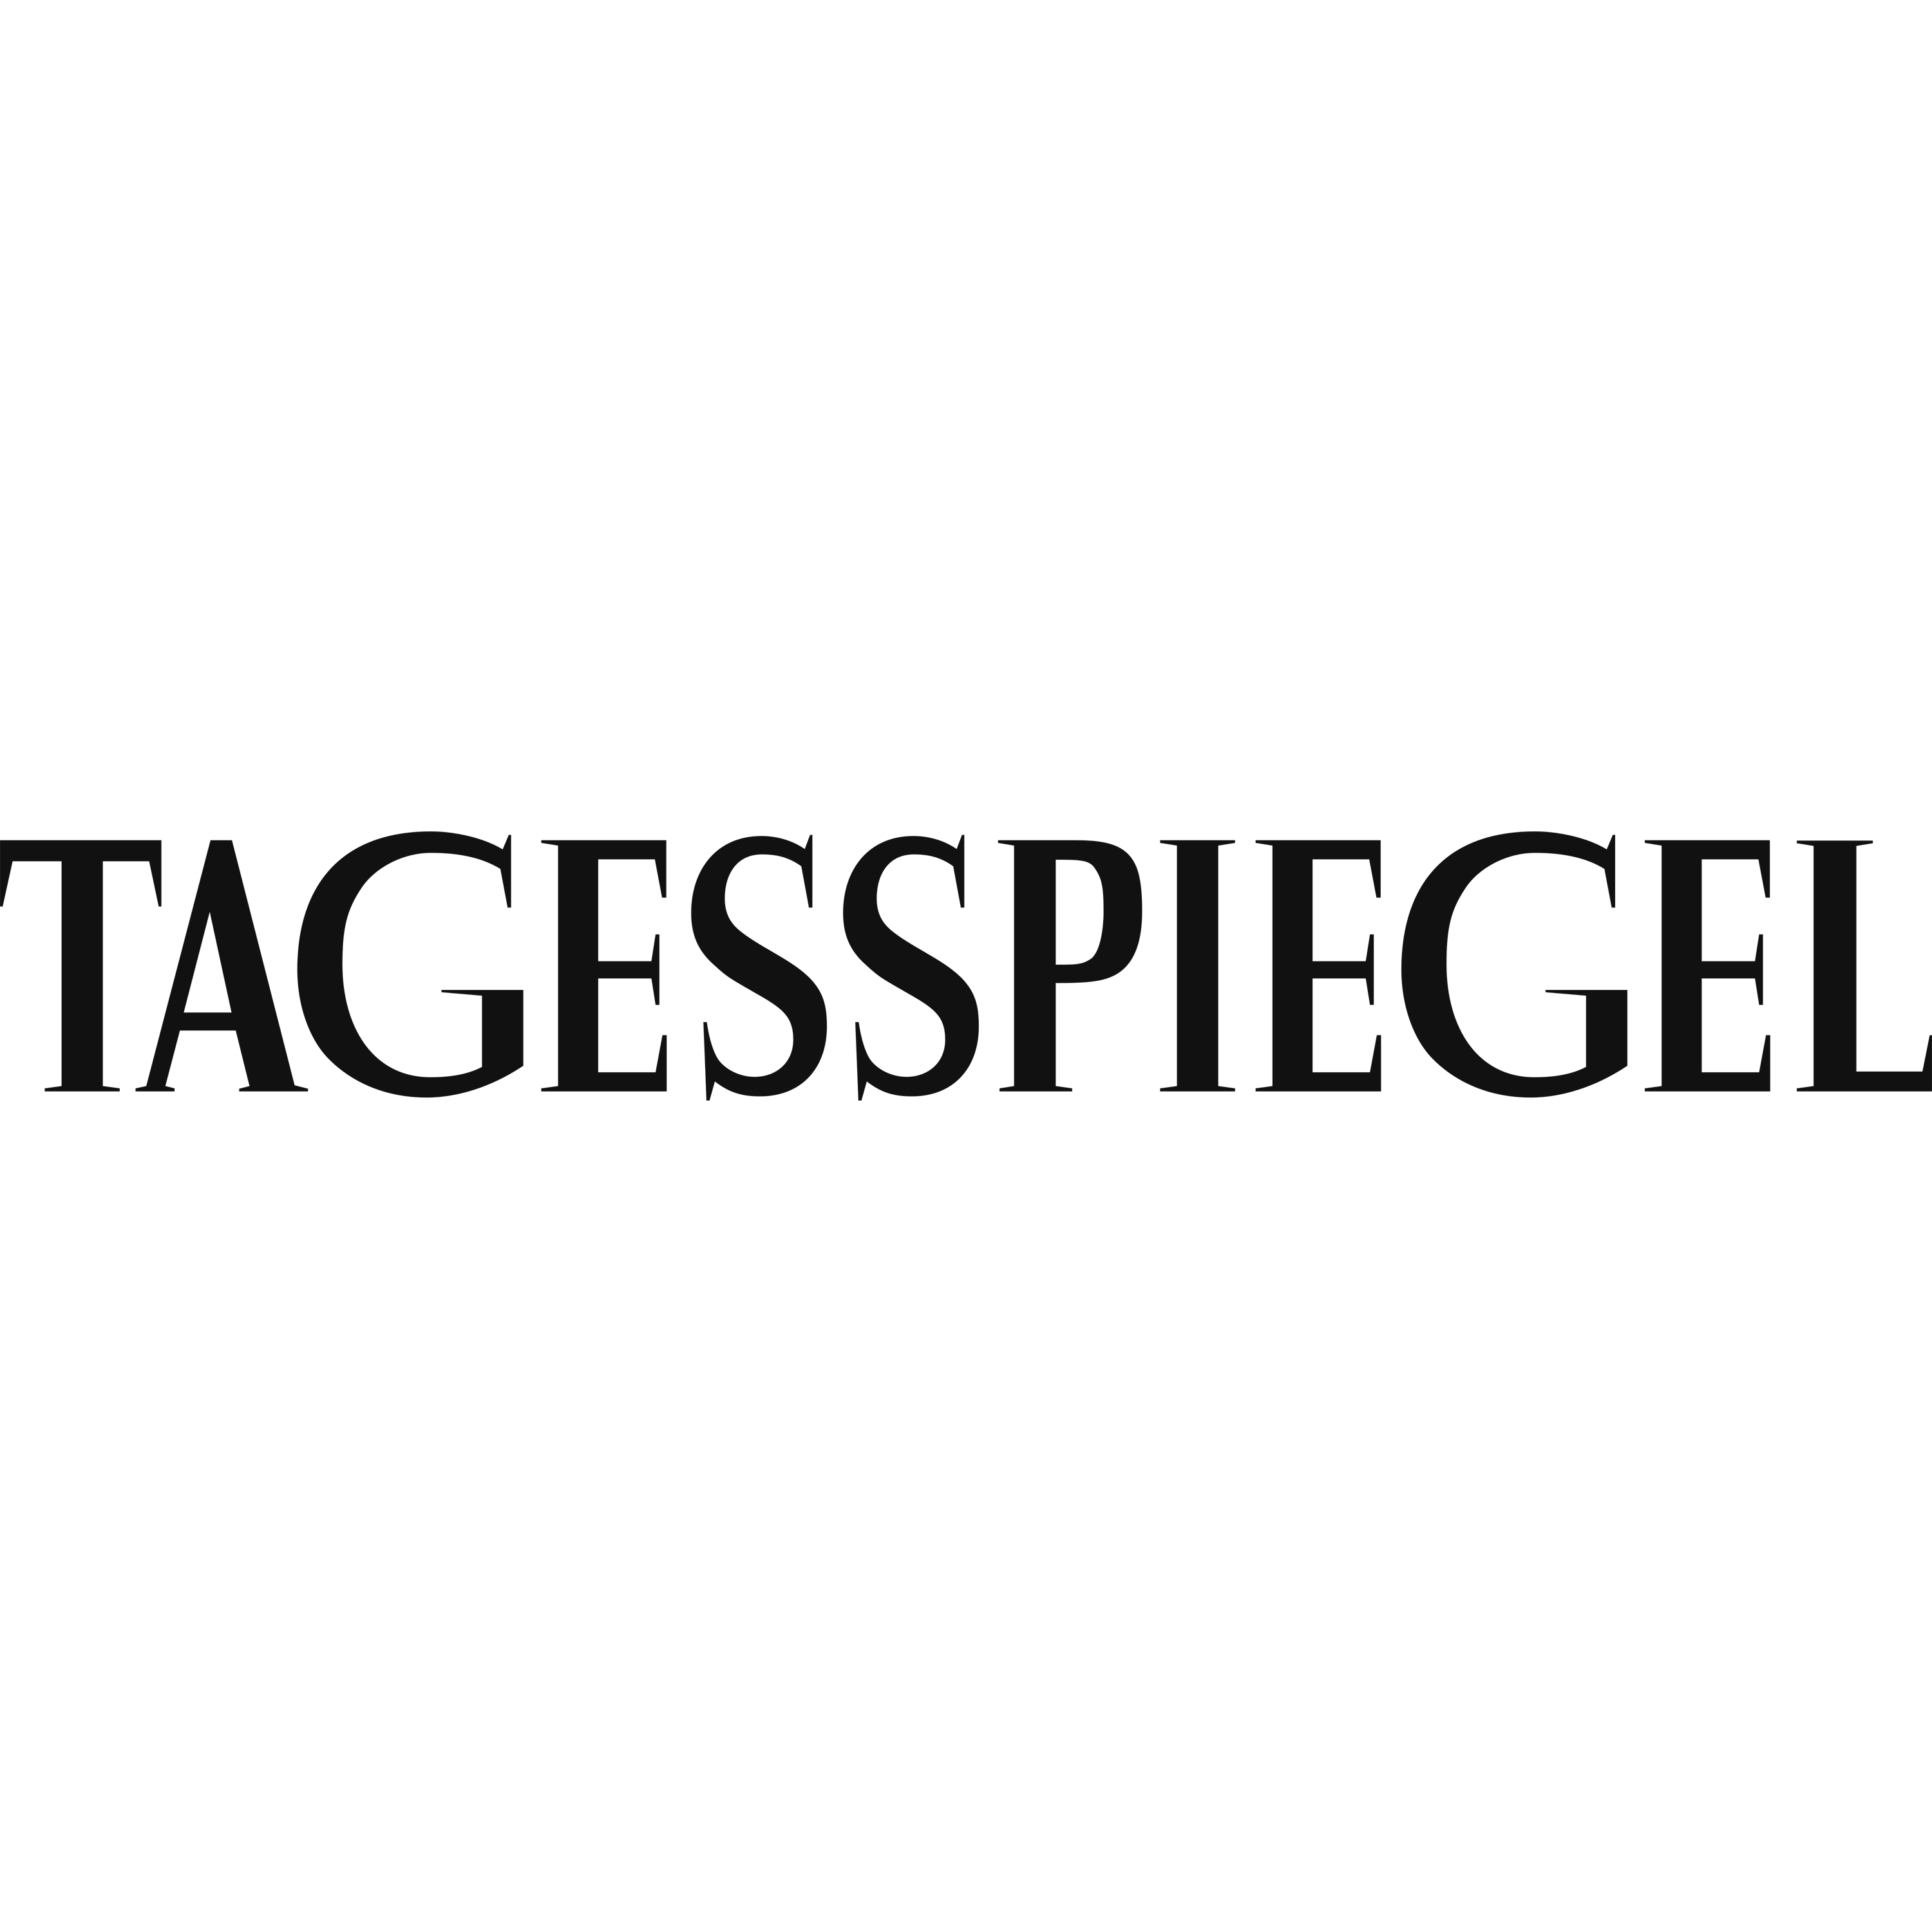 Tagesspiegel Logo 2022 Transparent Image